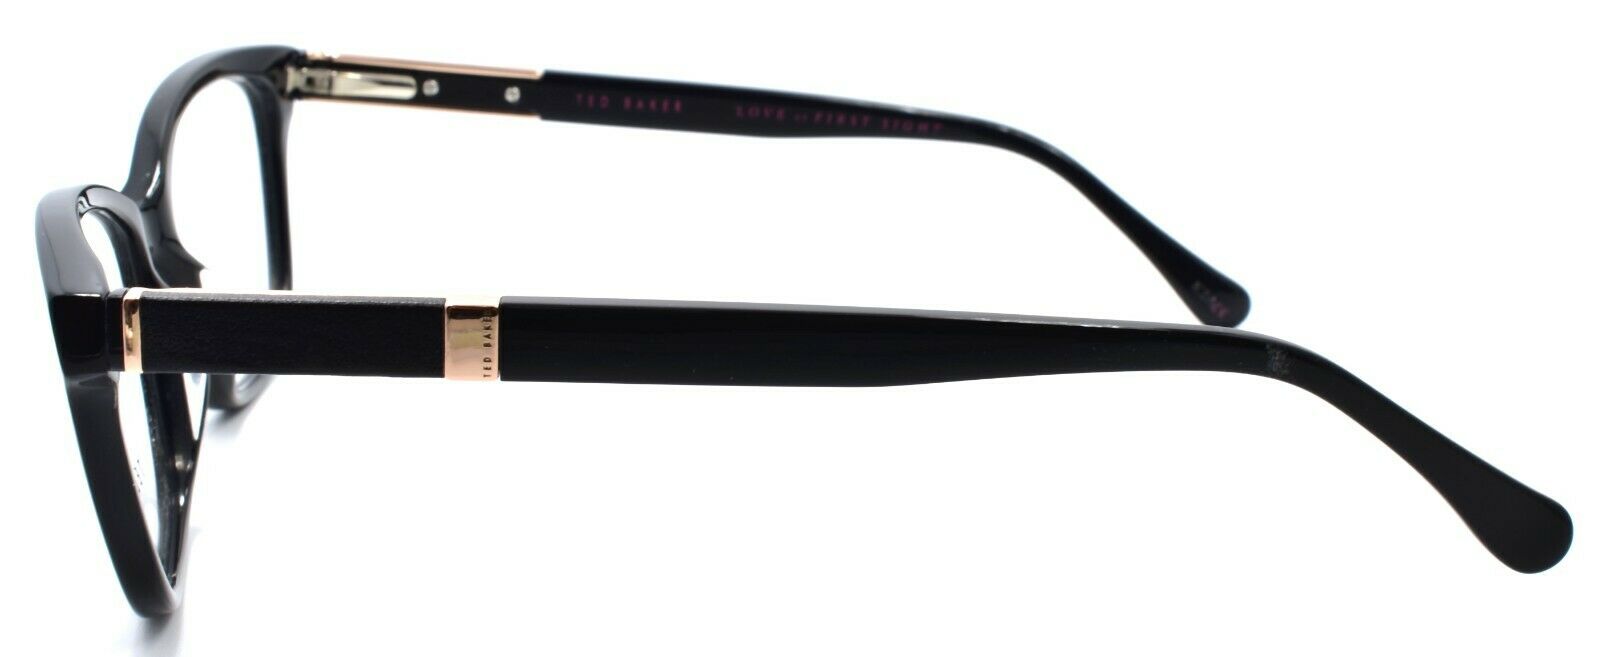 3-Ted Baker Senna 9124 001 Women's Eyeglasses Frames 52-16-140 Black-4894327141043-IKSpecs